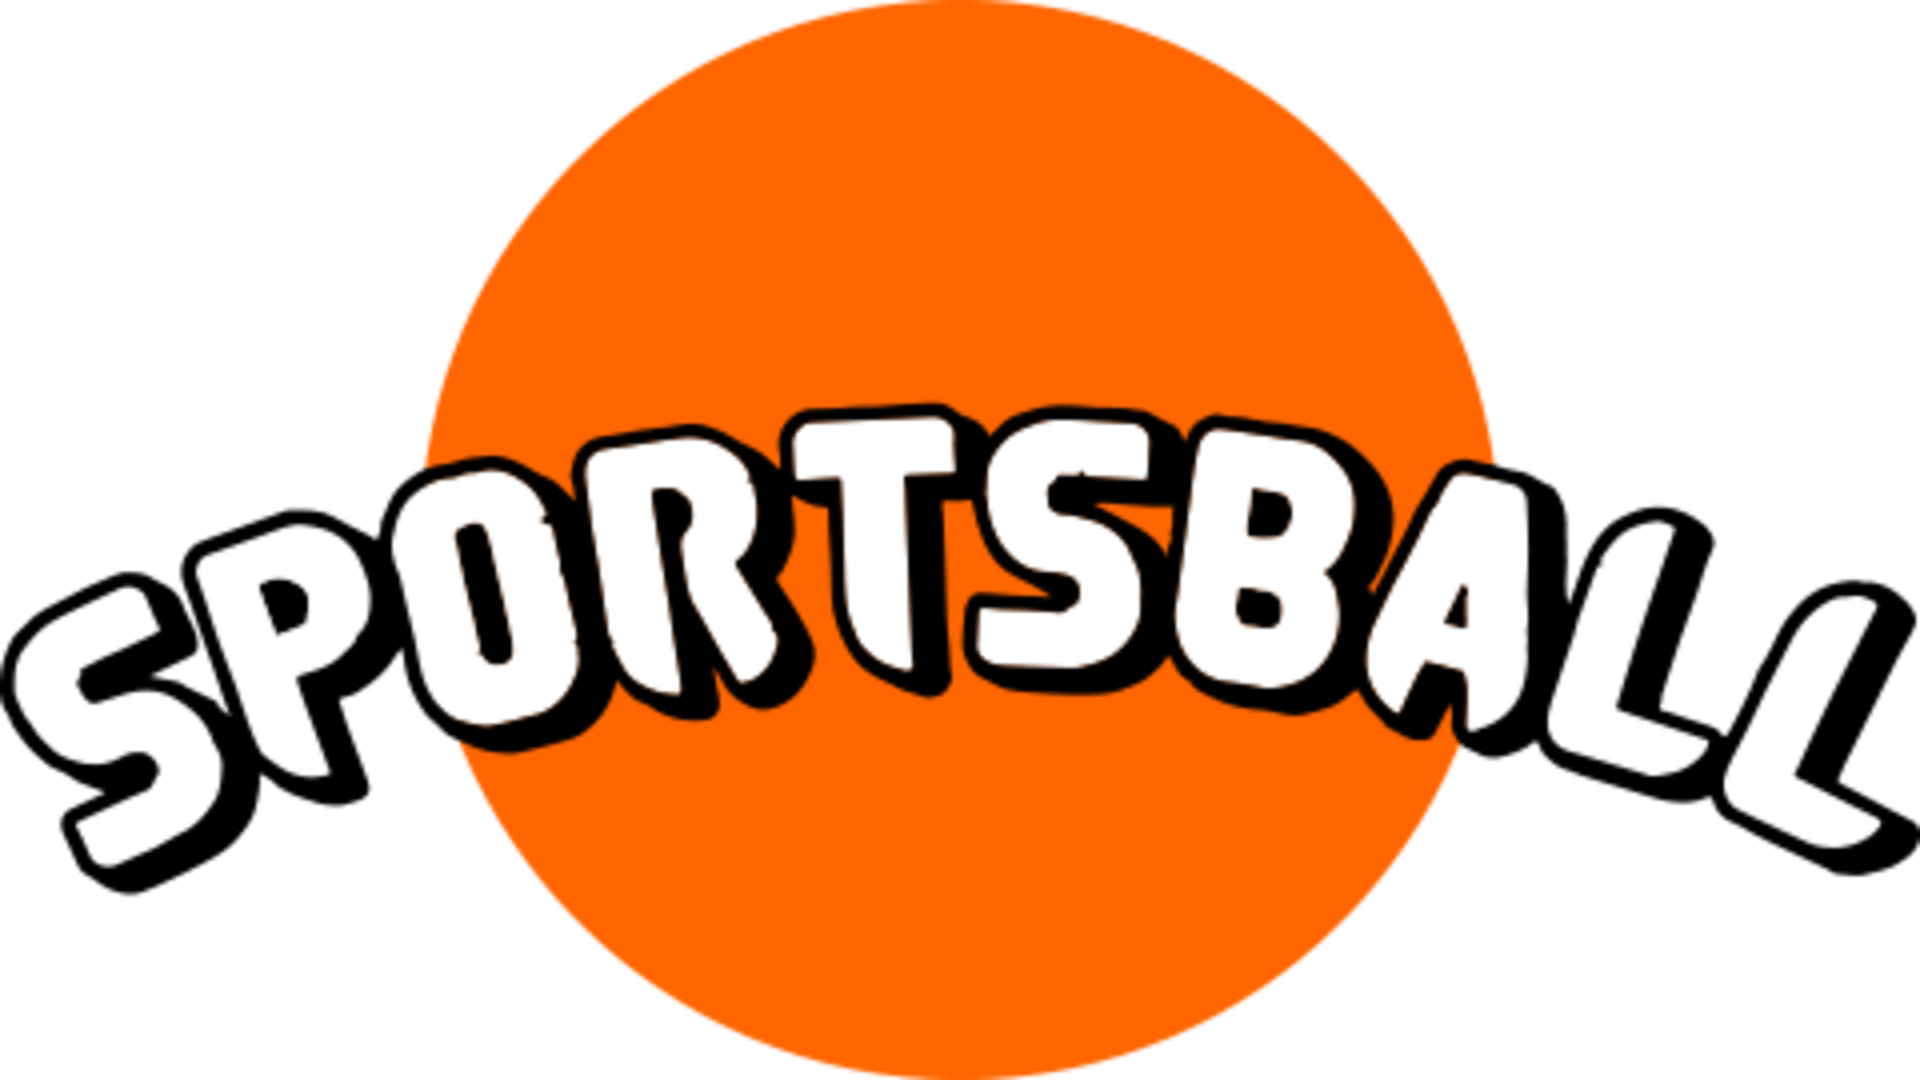 Ball Circle Orange Logo - Series Sportsball - Rooster Teeth